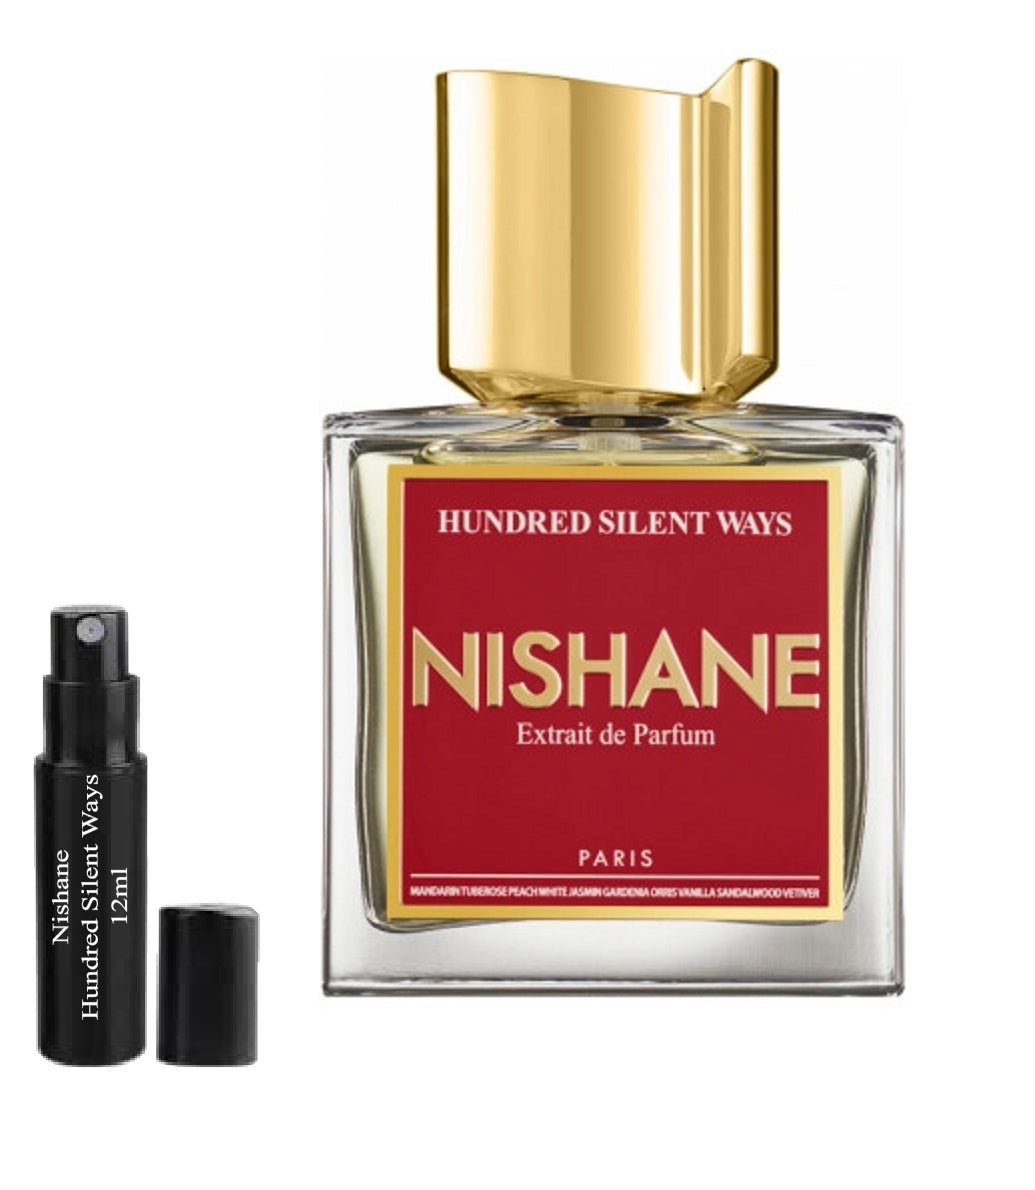 Nishane Hundred Silent Ways 12ml 0.41 fl. o.z. próbka perfum,  Nishane Hundred Silent Ways 12ml 0.41 fl. o.z. образец духов,  Nishane Hundred Silent Ways 12ml 0.41 fl. o.z. vzorec parfuma